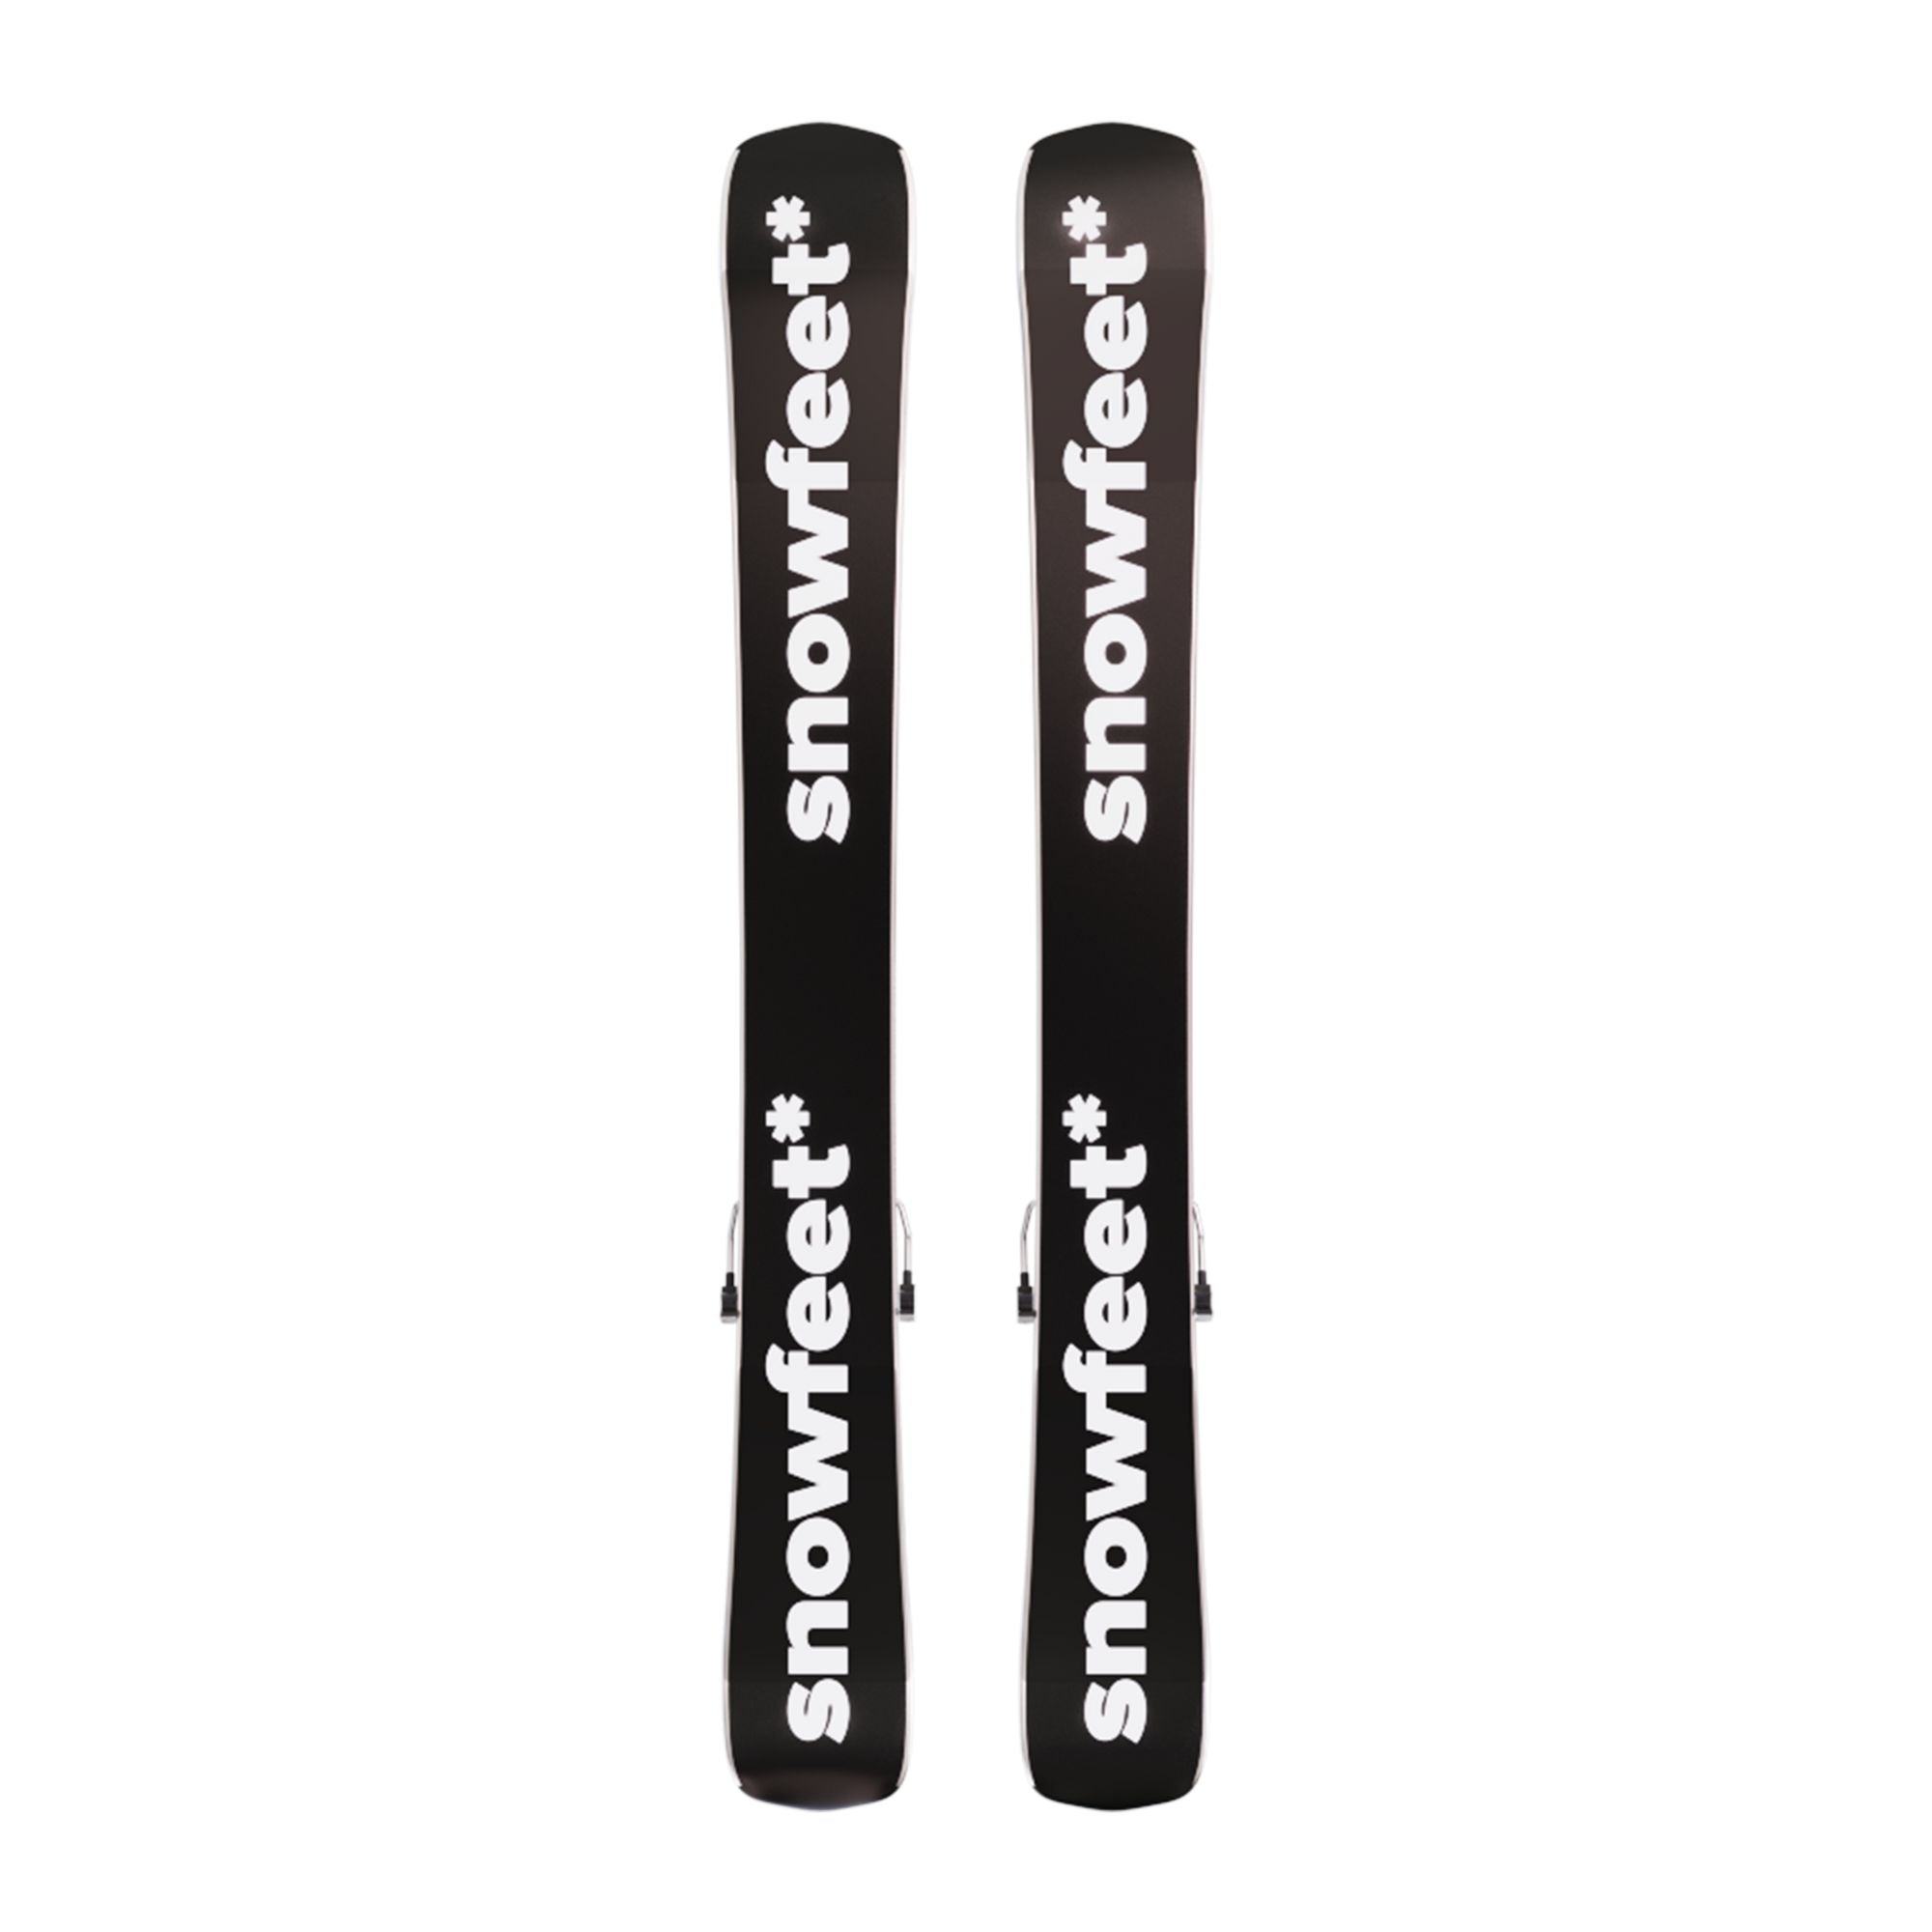 skiboards snowblades short ski 99 snowfeet mini little ski skiblades for ski with ski boot bindings black